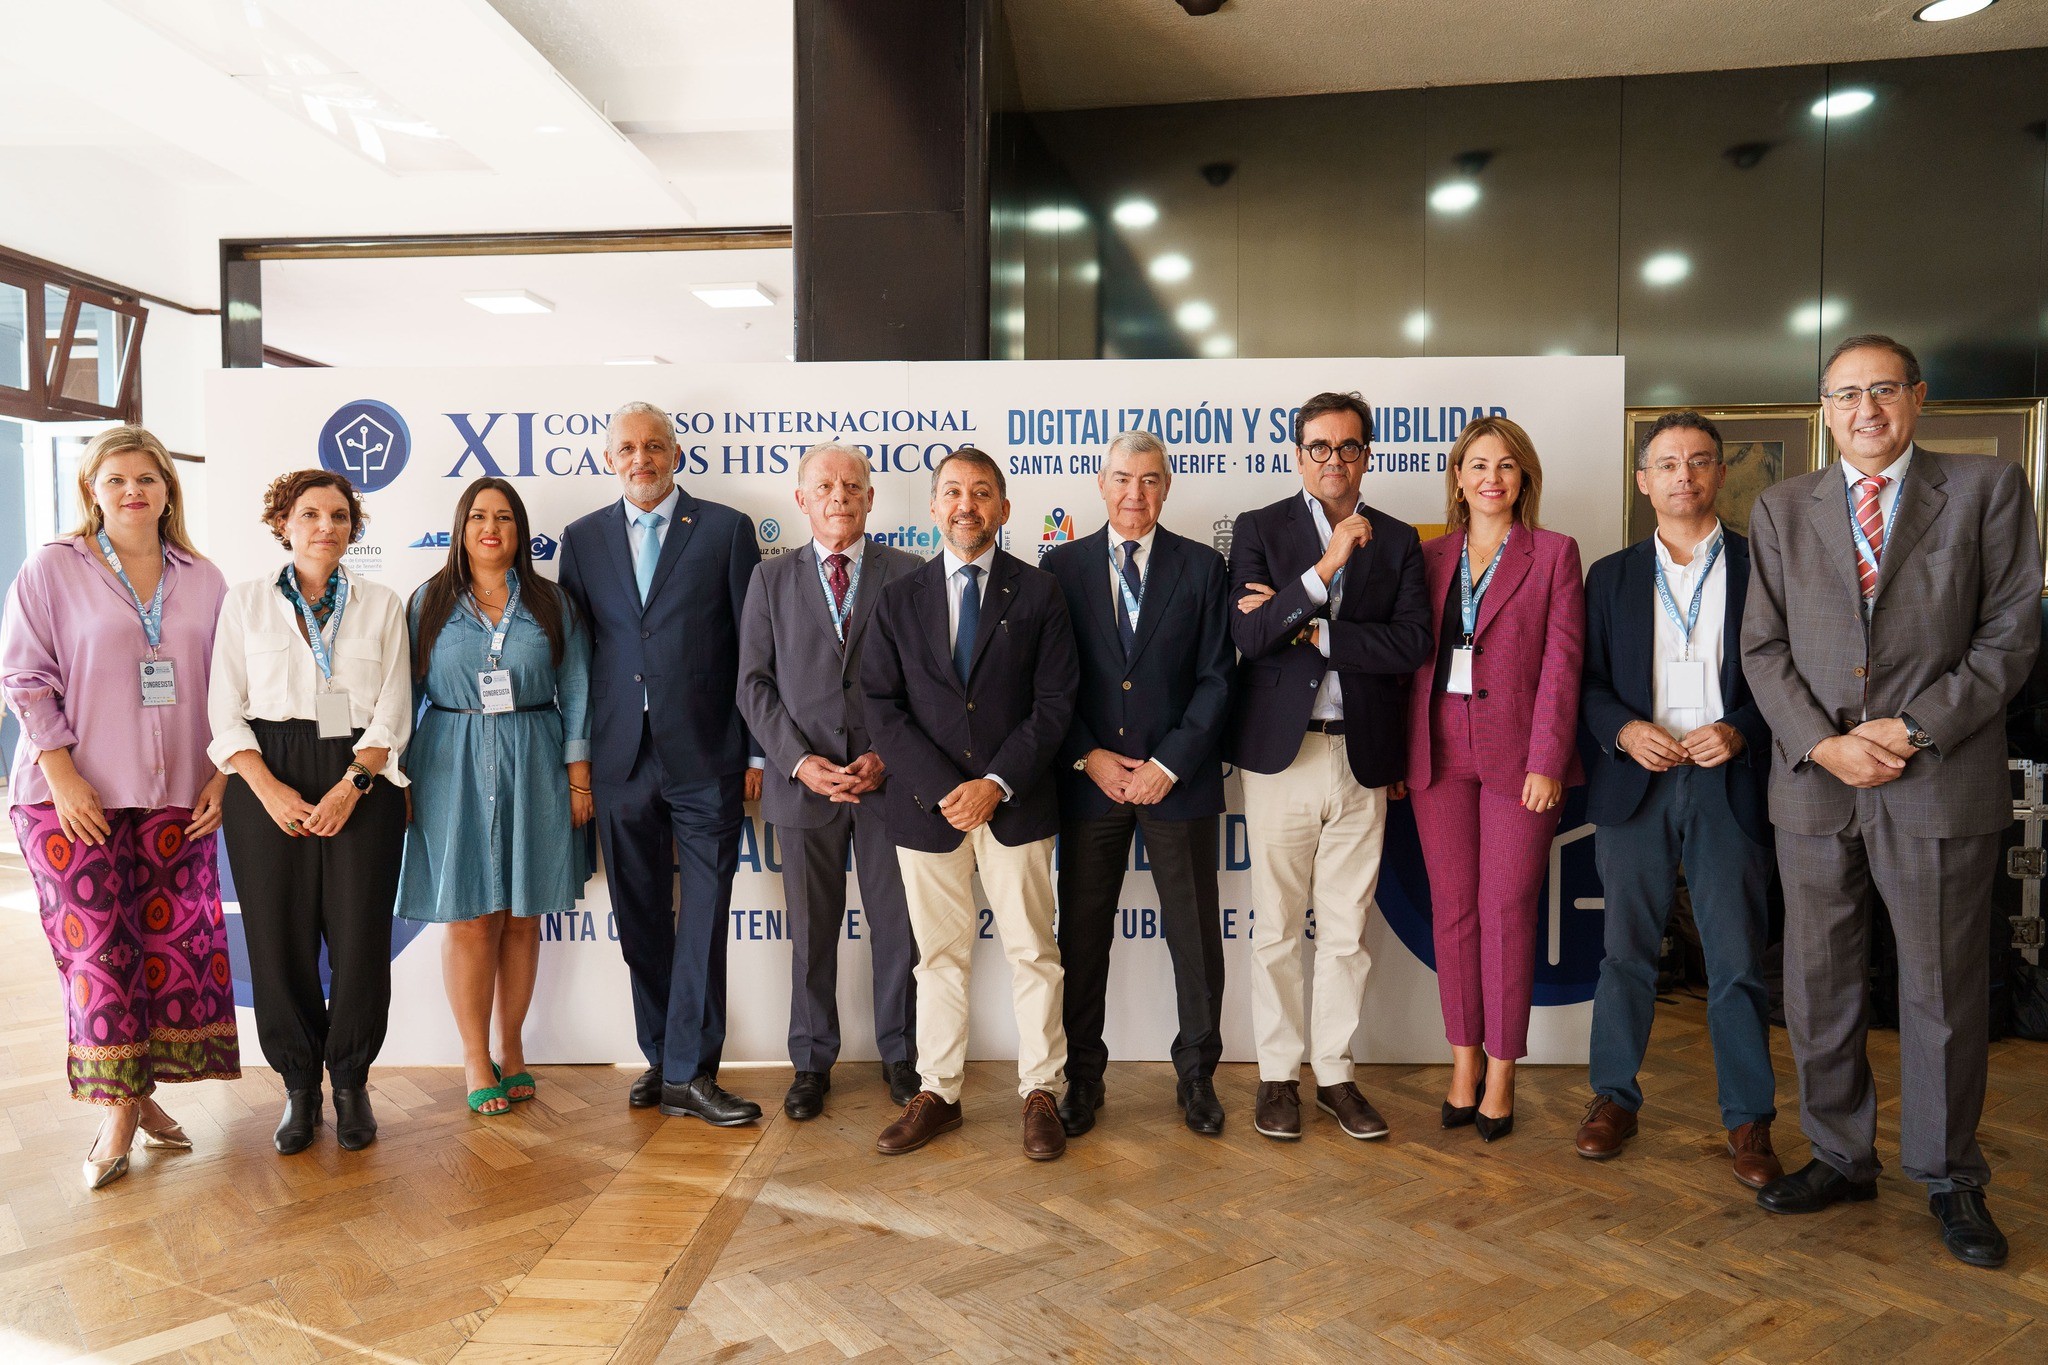 Abbas Moujir participa en el XI Congreso Internacional de Cascos Históricos de España